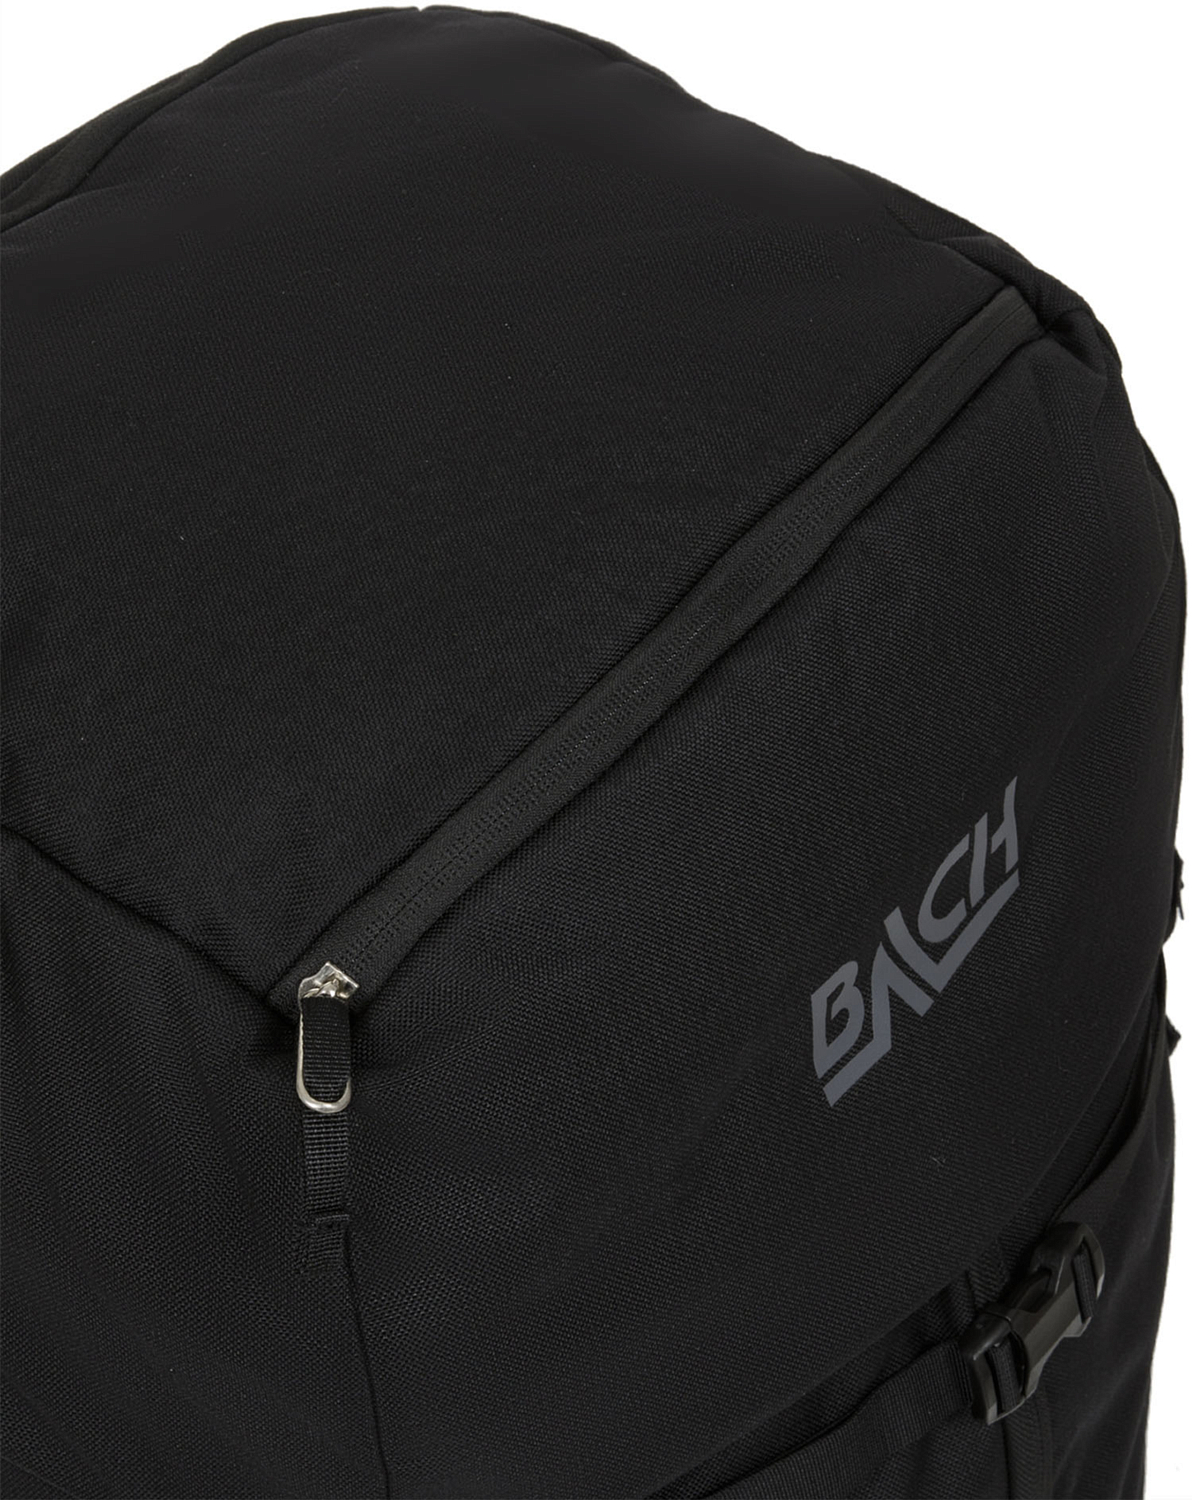 Рюкзак BACH Pack Specialist 90 (regular) Black